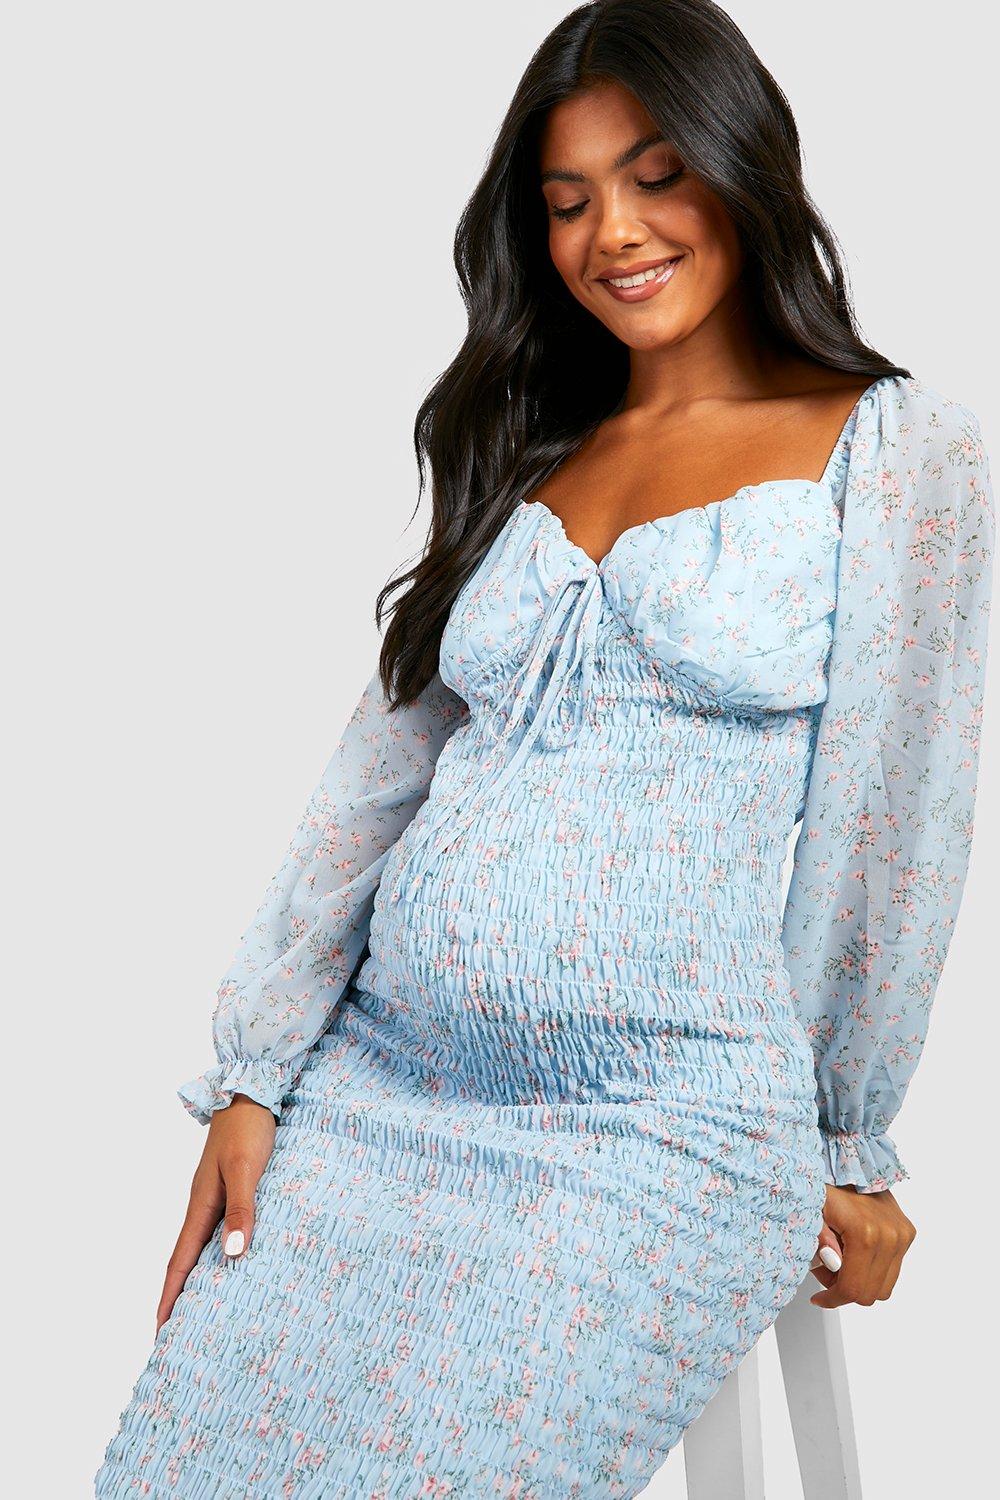 boohoo maternity dresses